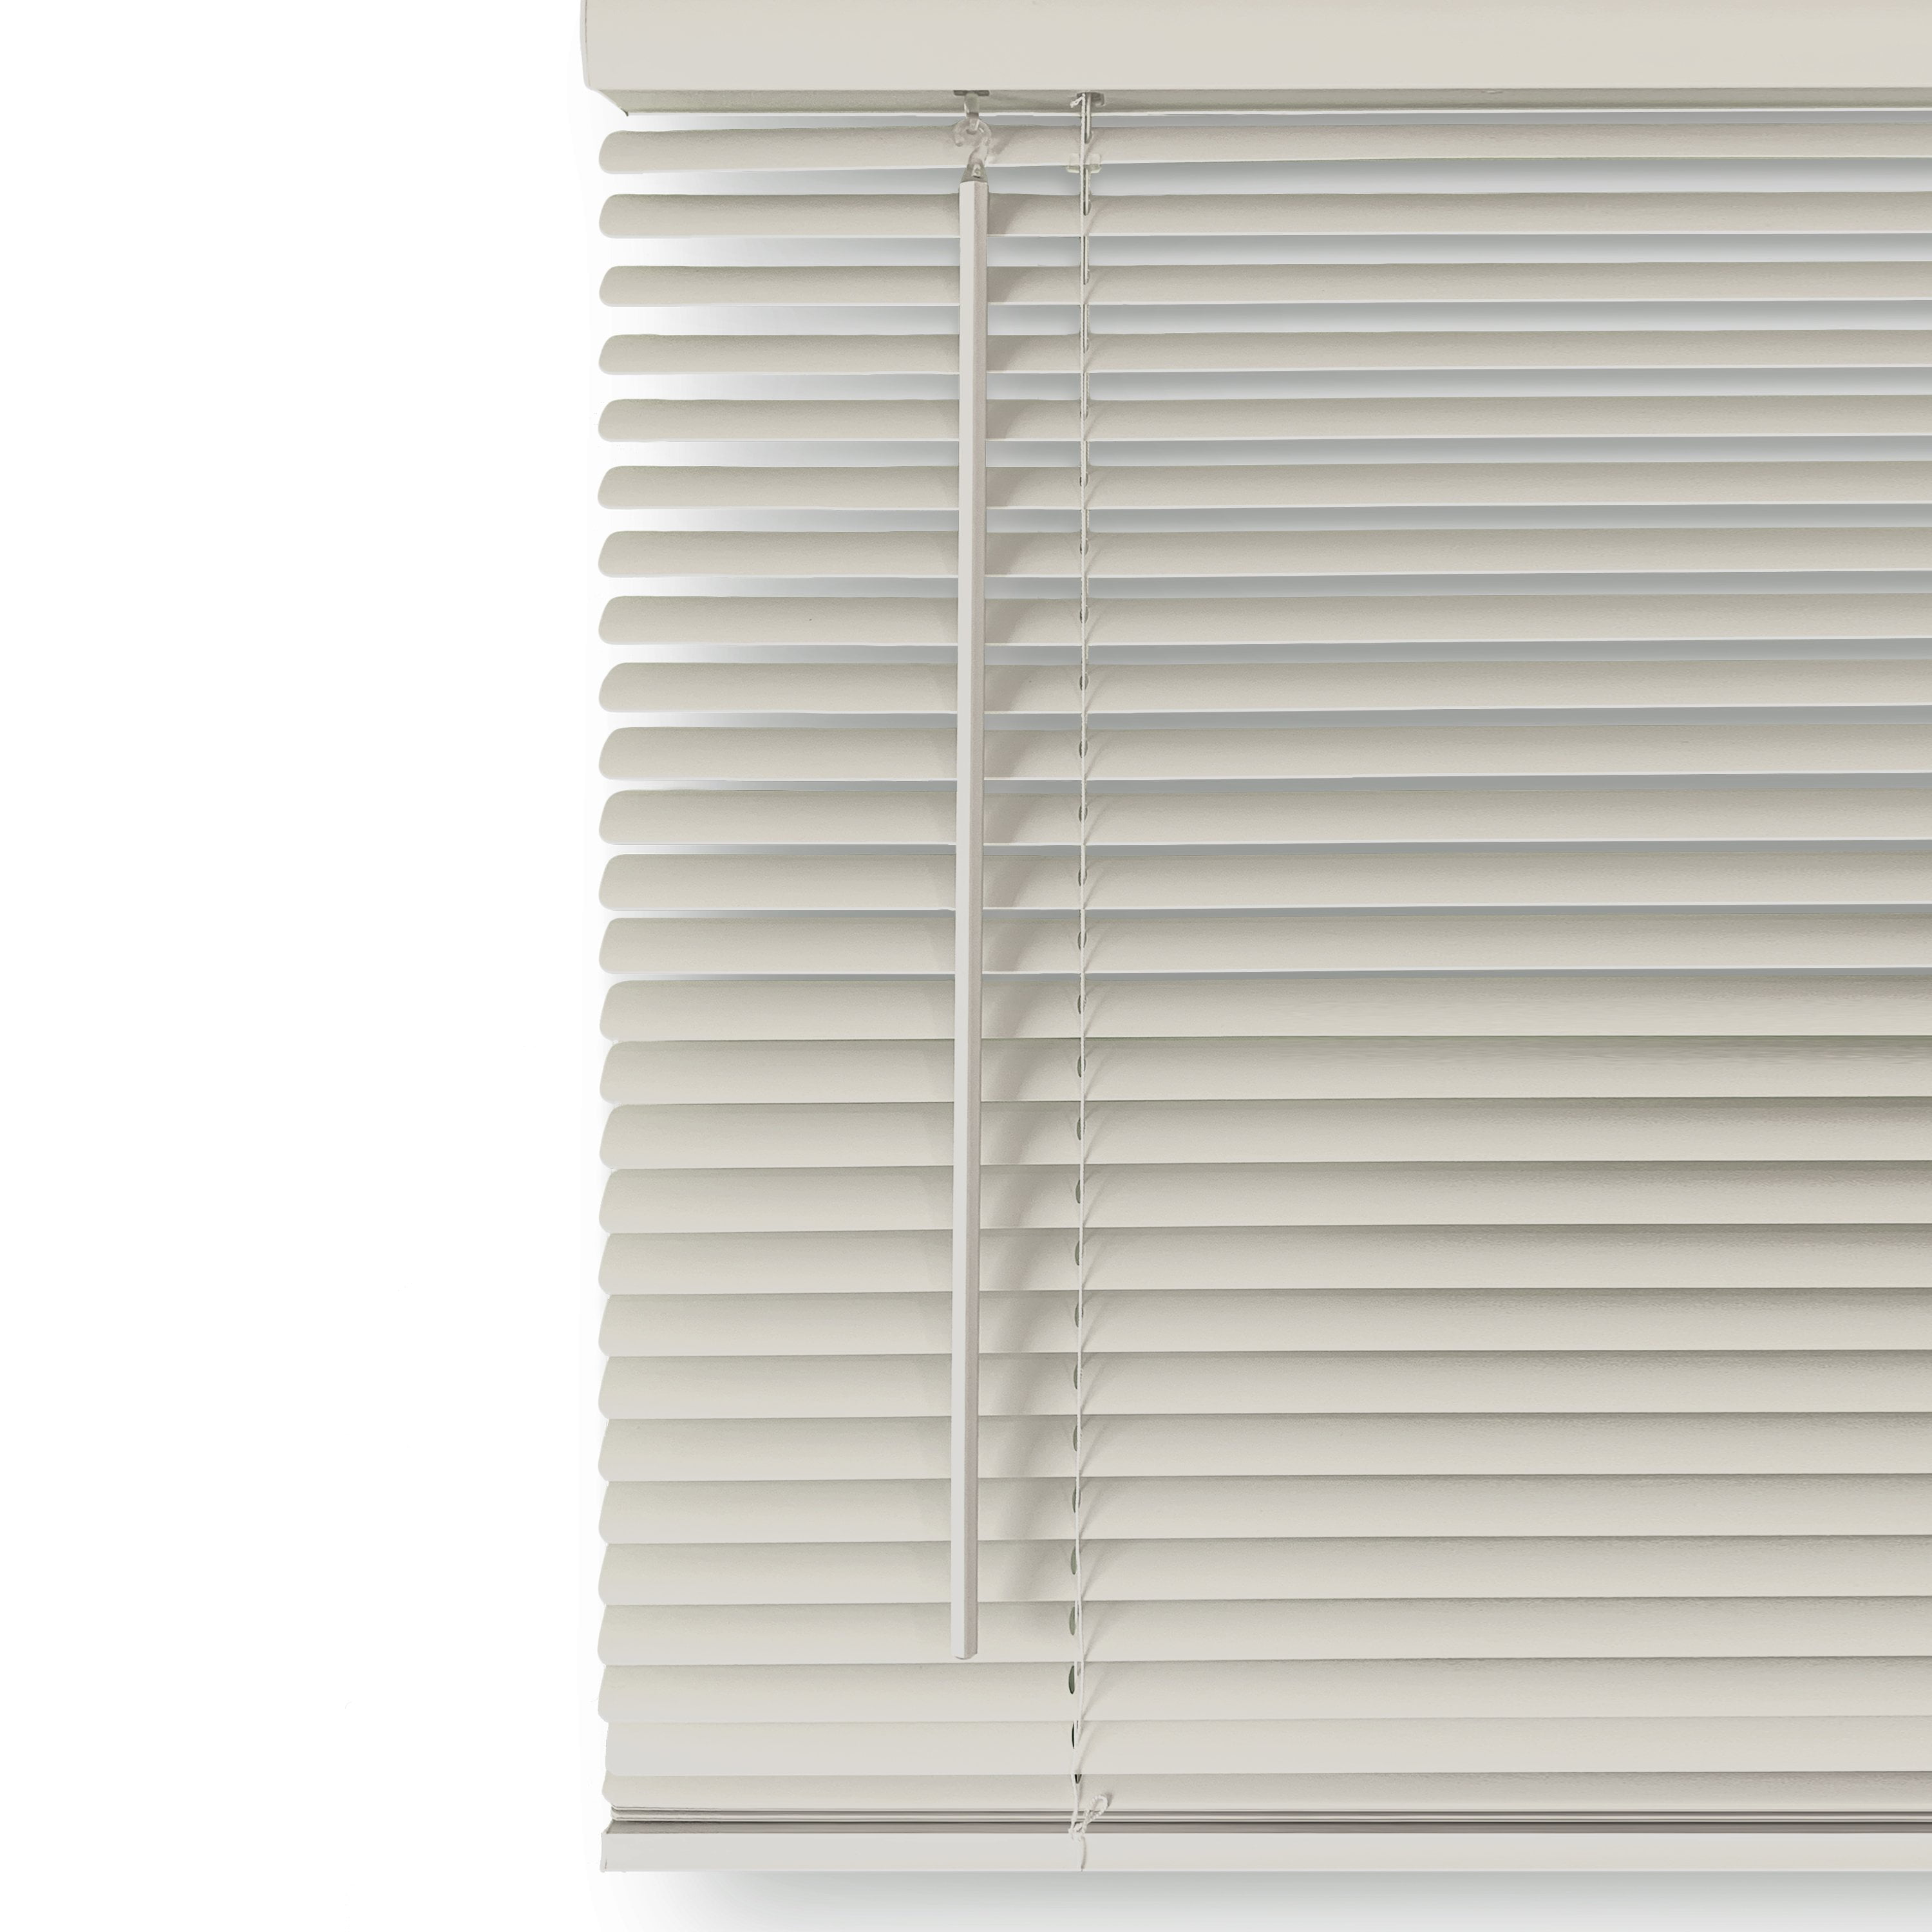 59x48 in White Aluminum Mini Blind Cordless Room Darkening Privacy Window Shade 